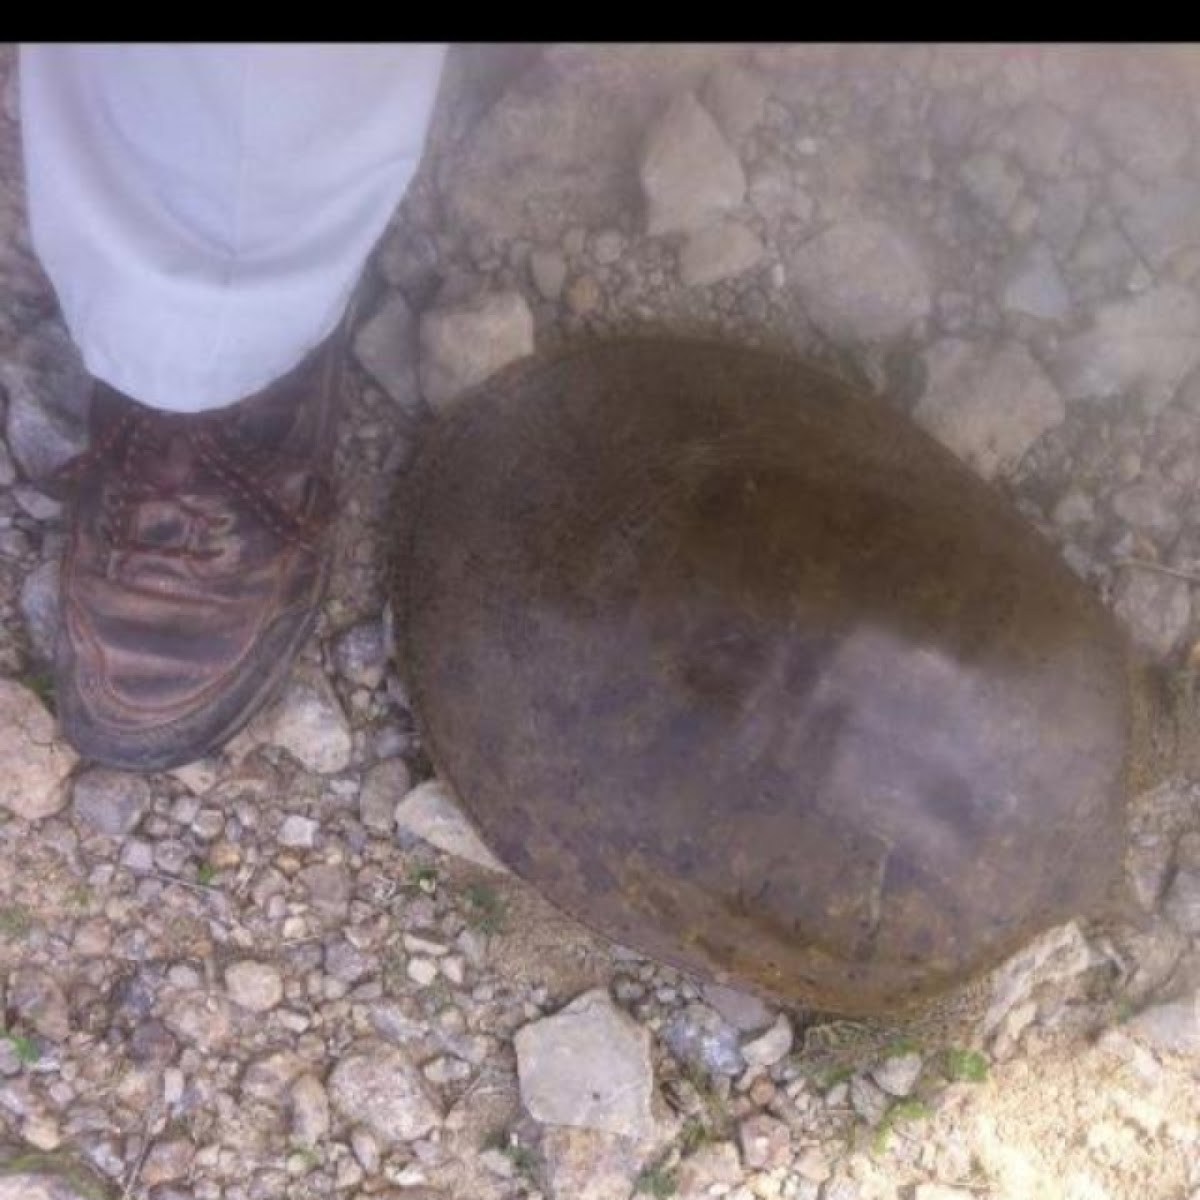 Softshell turtle